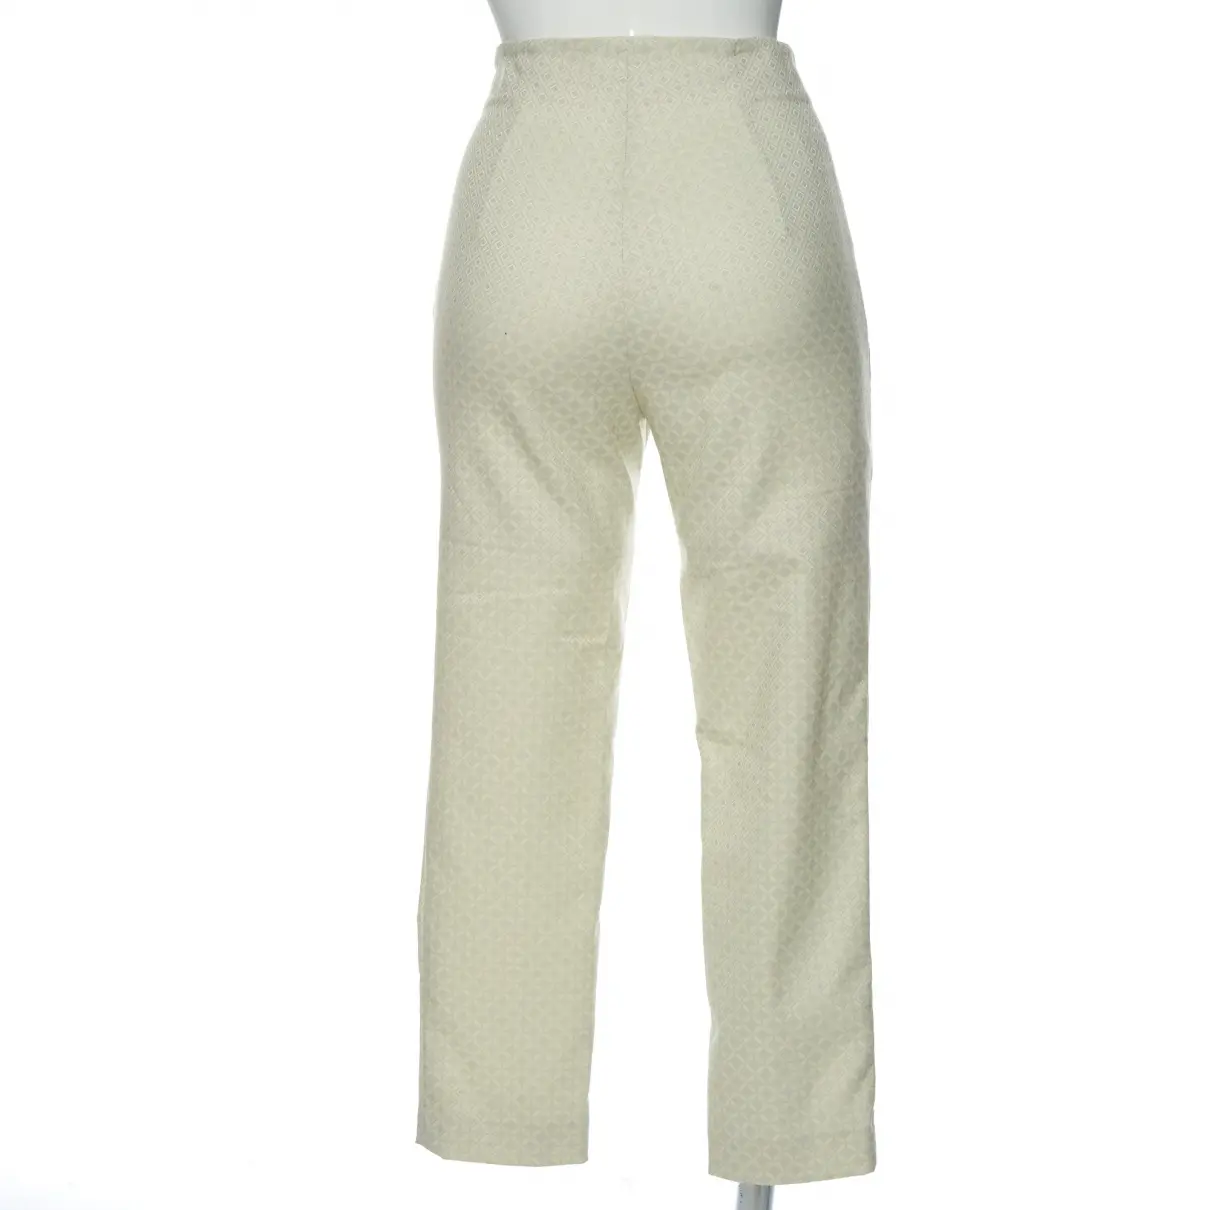 Colombo Slim pants for sale